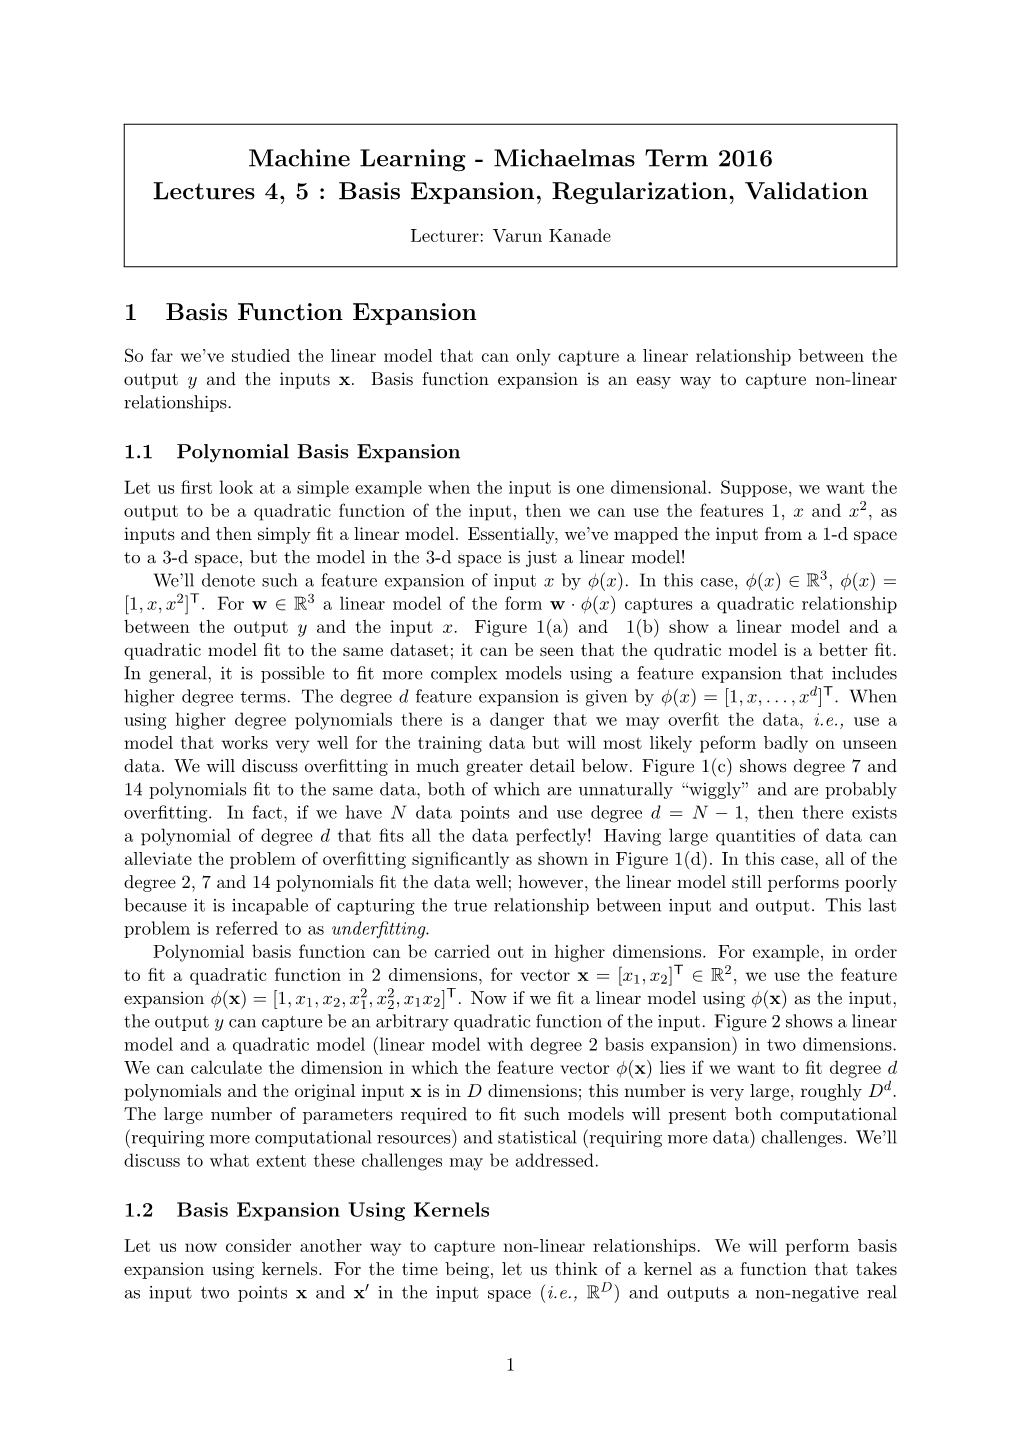 Michaelmas Term 2016 Lectures 4, 5 : Basis Expansion, Regularization, Validation